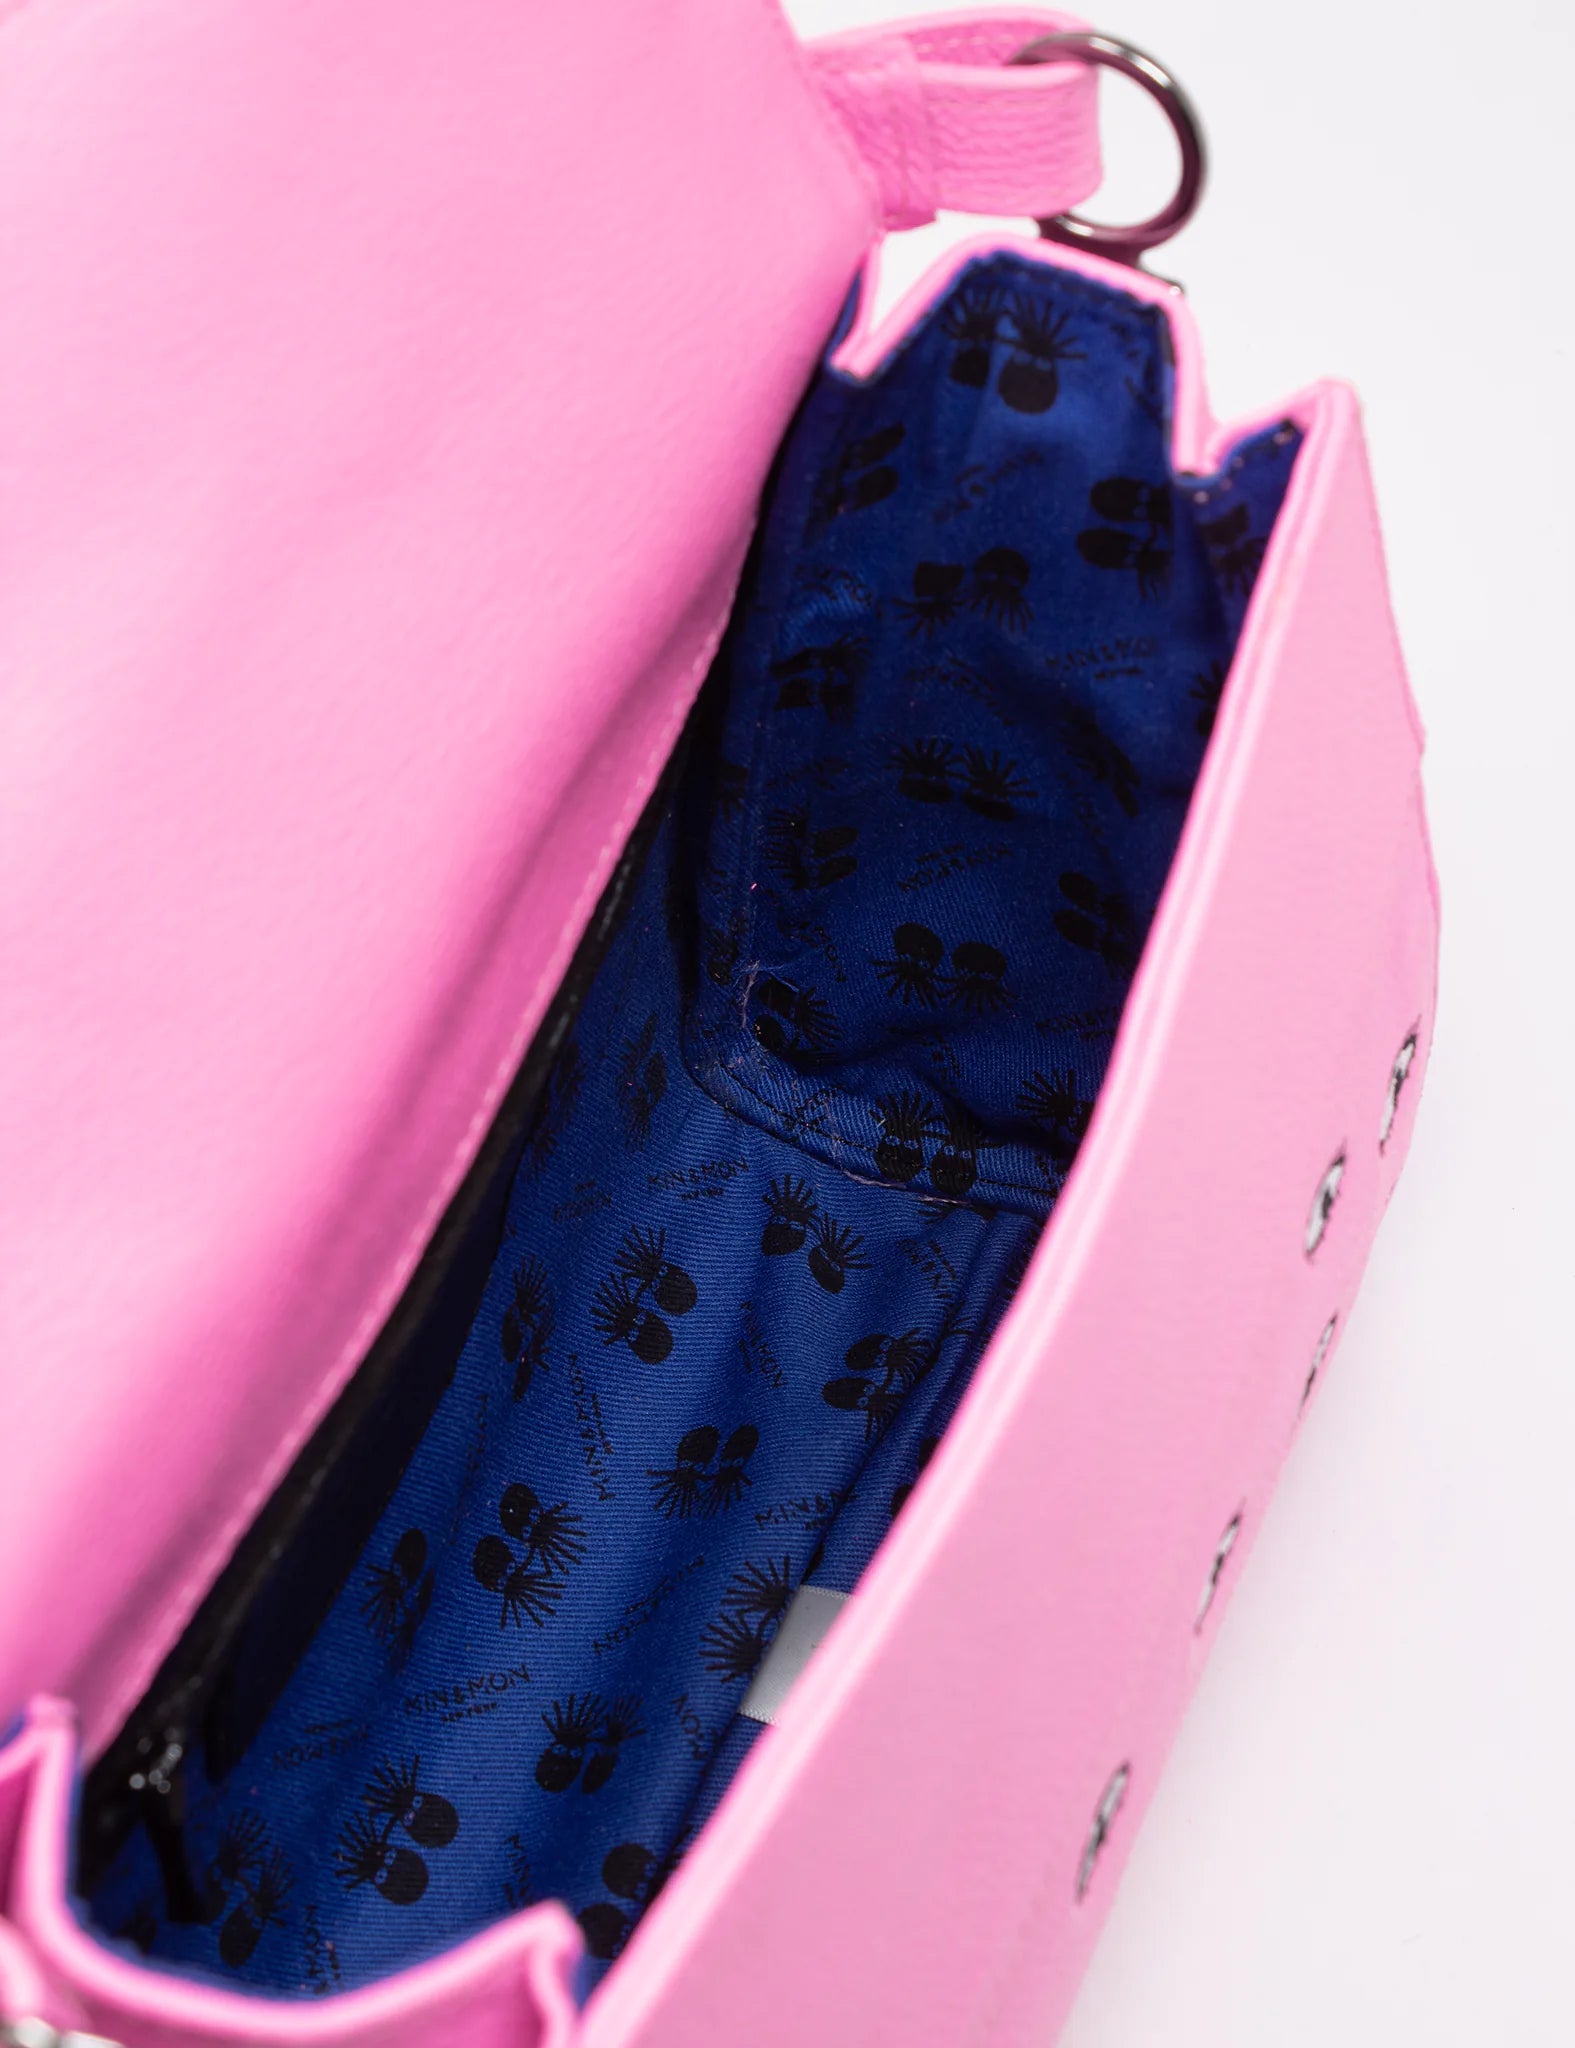 Anastasio Mini Crossbody Handbag Bubblegum Pink Leather - All Over Eyes Embroidery - Inside view